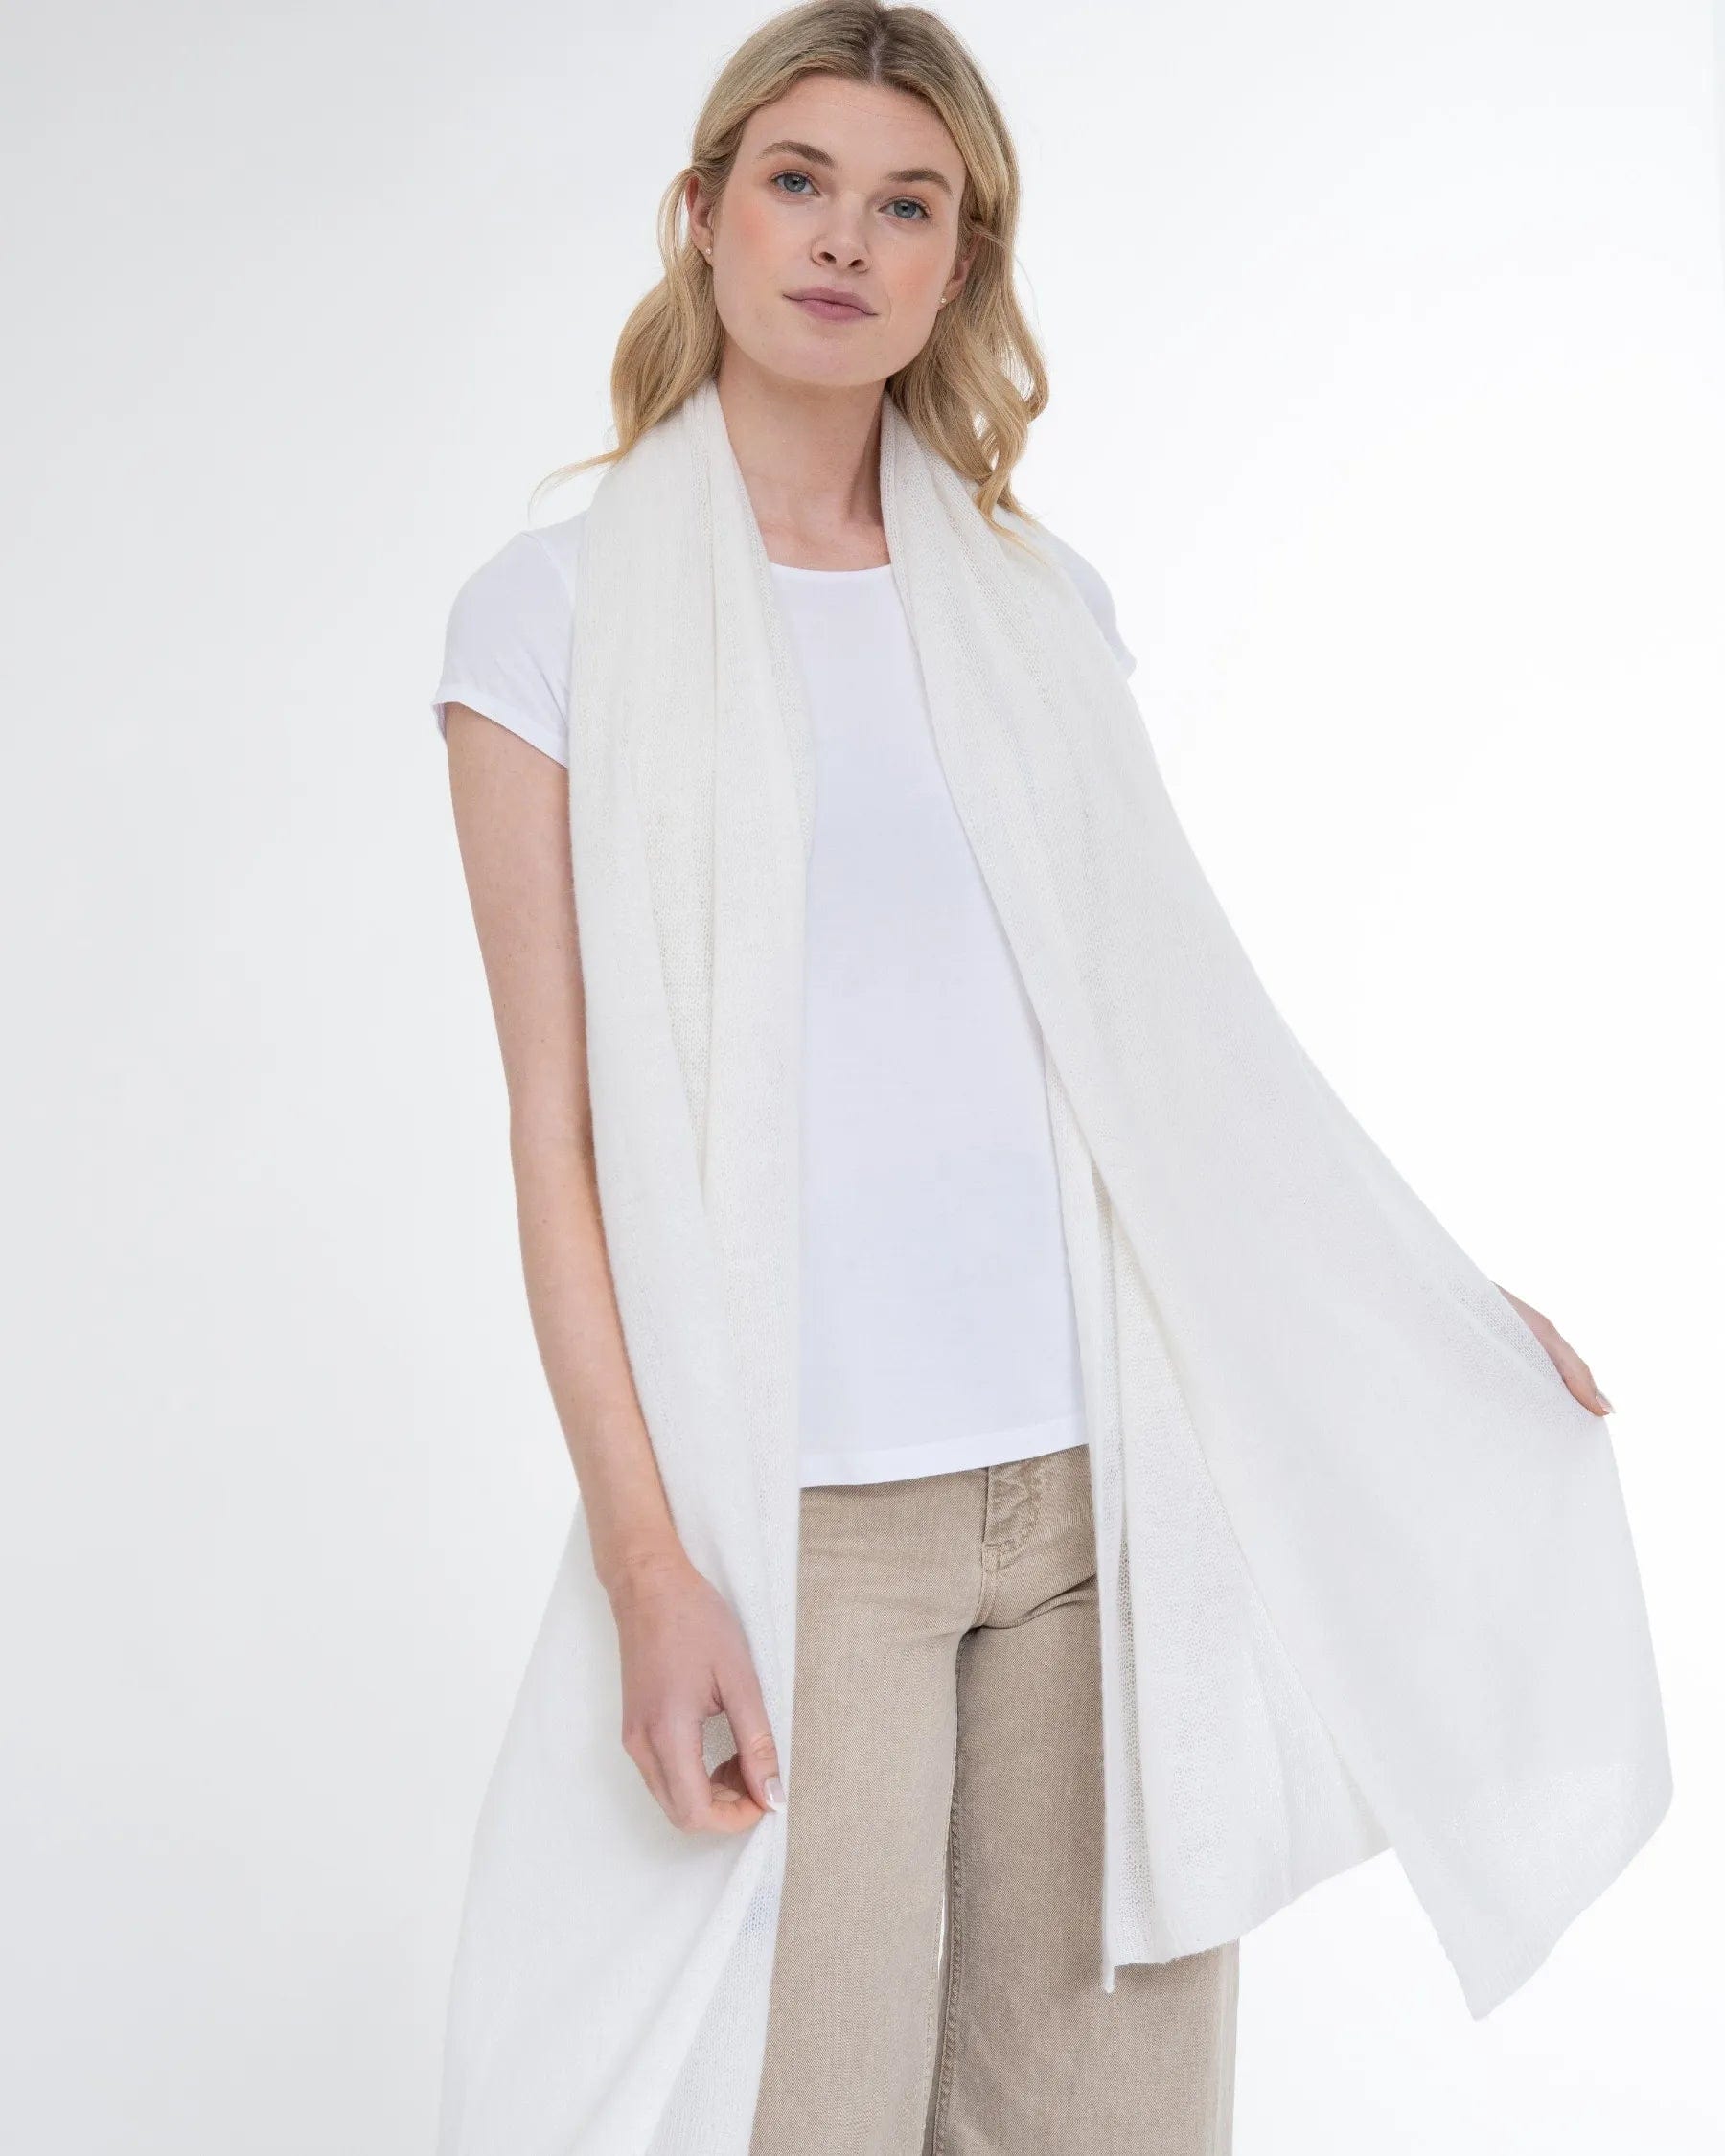 Alashan Cashmere Company Women's Accessories White Cotton Cashmere Breezy Travel Wrap